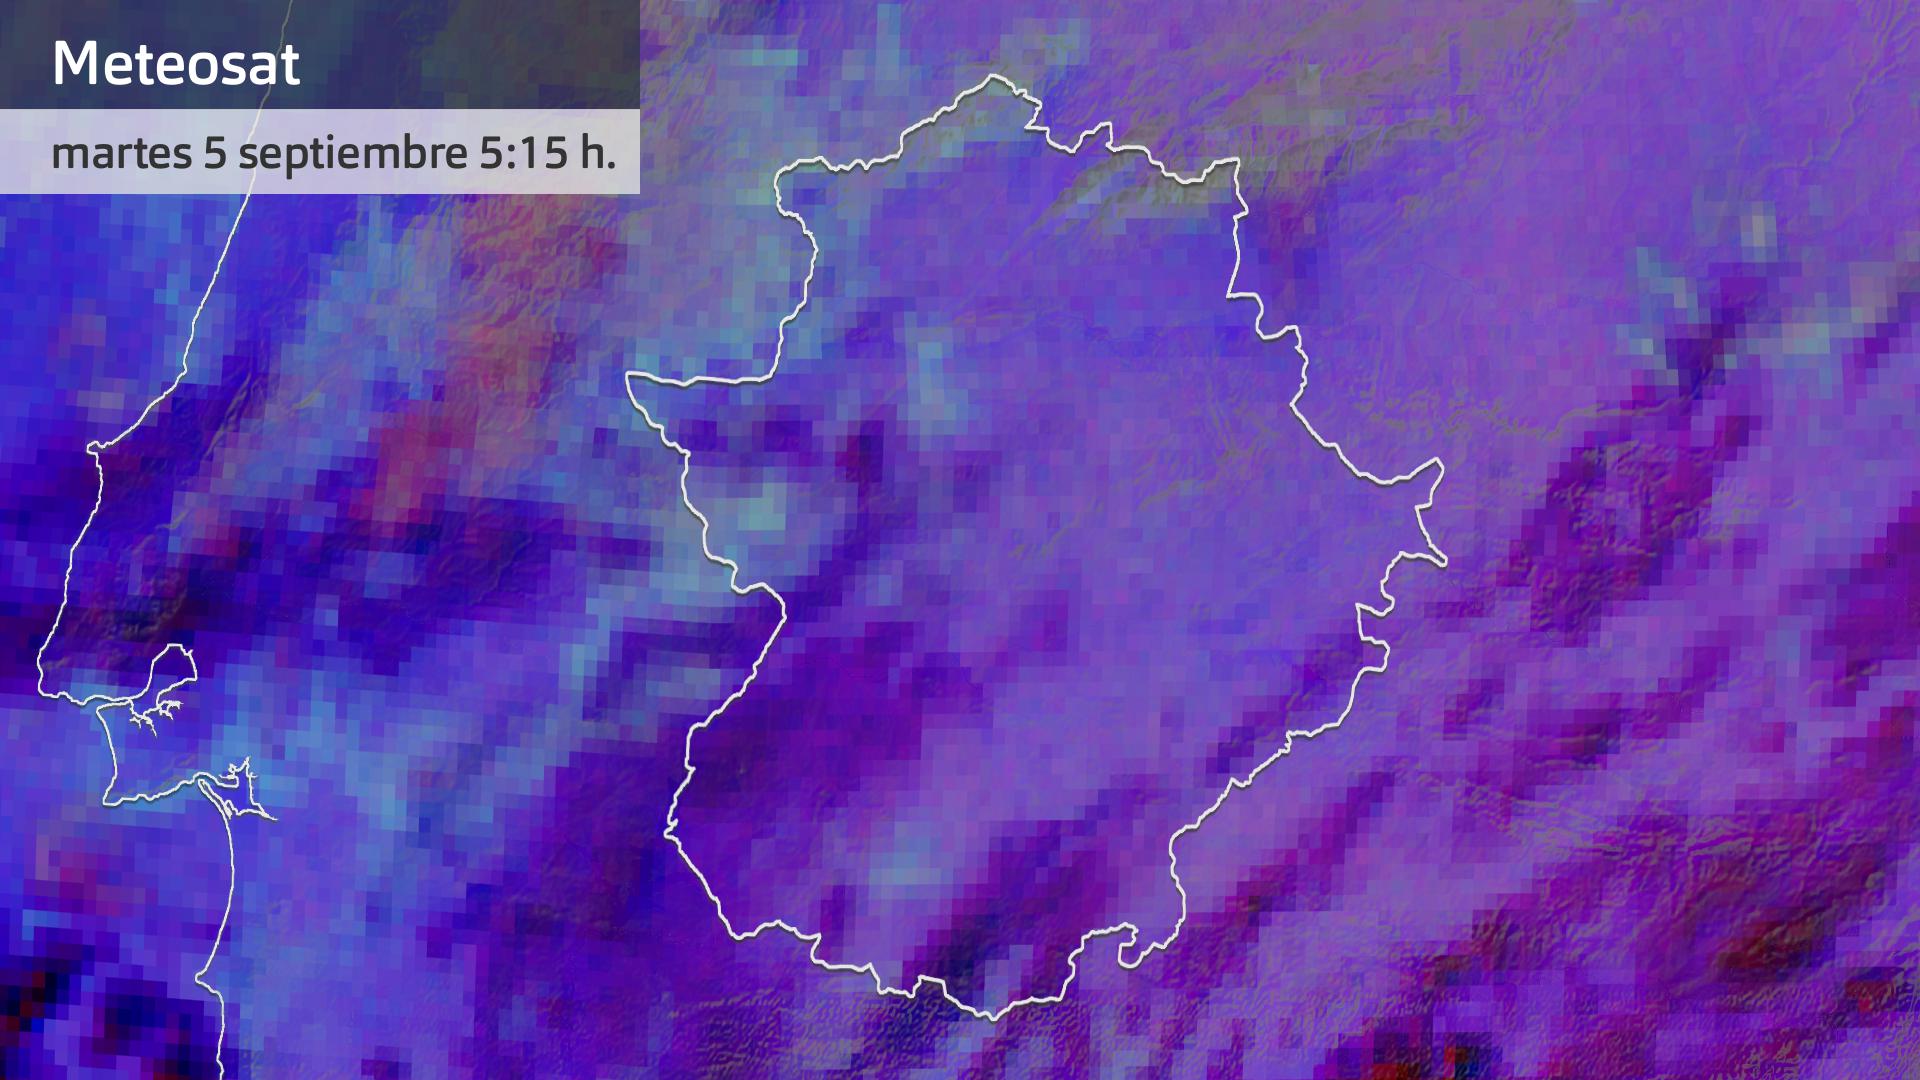 Imagen del Meteosat martes 5 de septiembre 5:15 h.